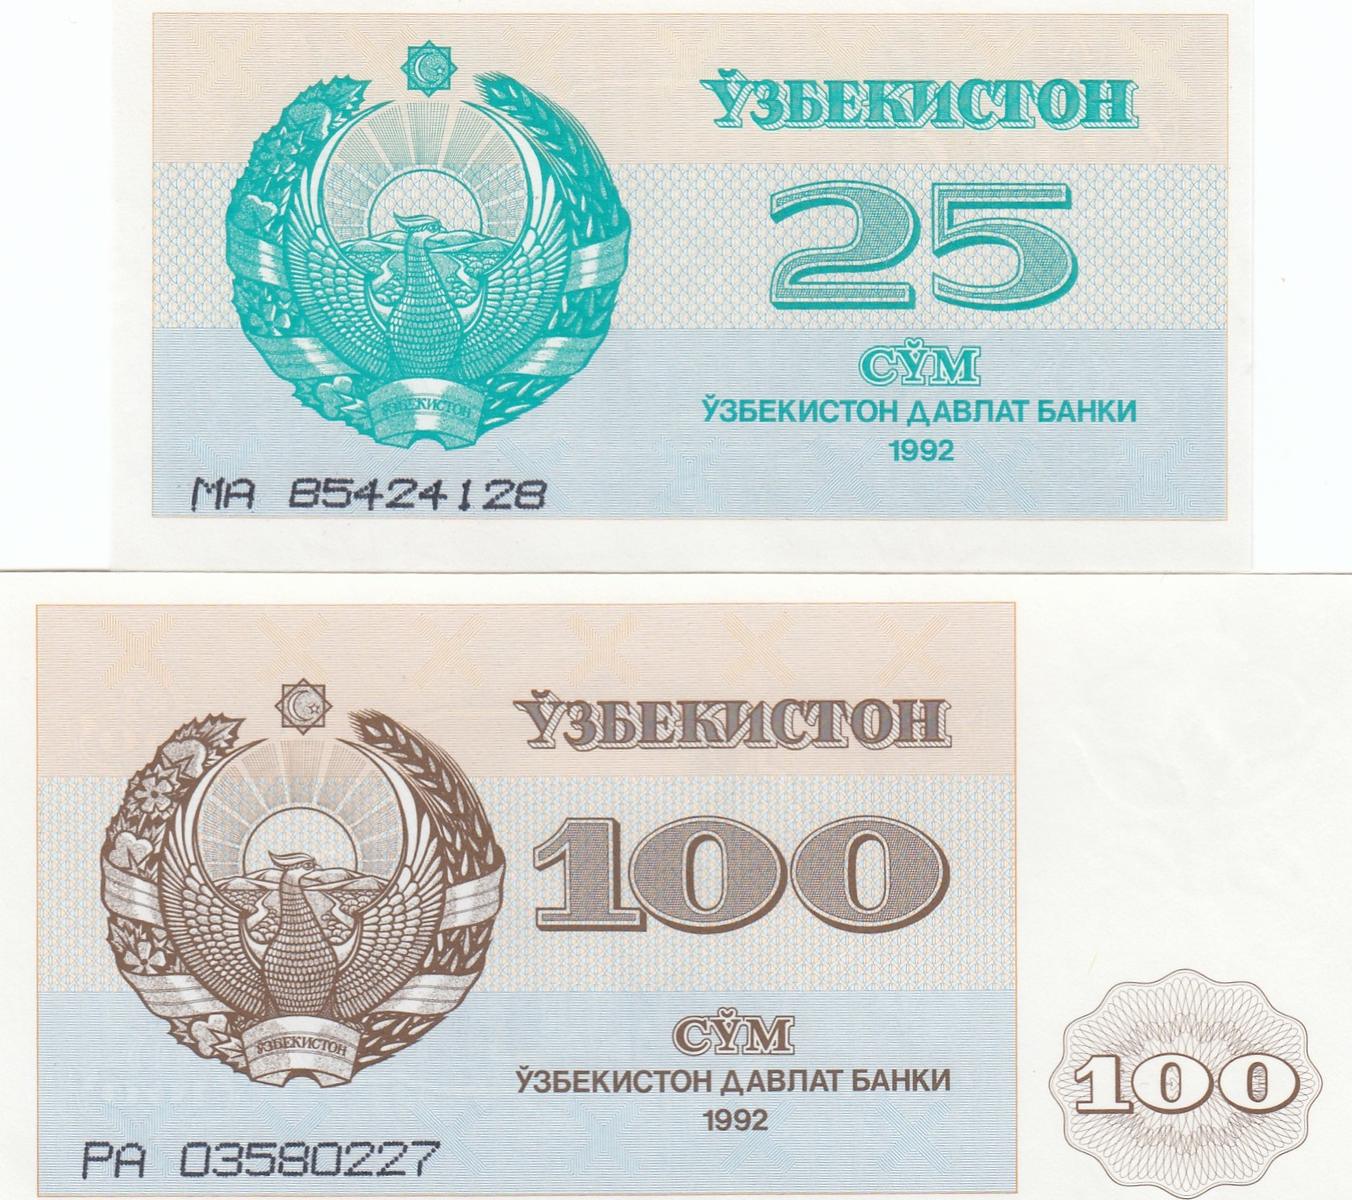 1 рубль в сумах узбекистан на сегодня. 2000 Узбекских сум. Купюра 2000 сум Узбекистан.